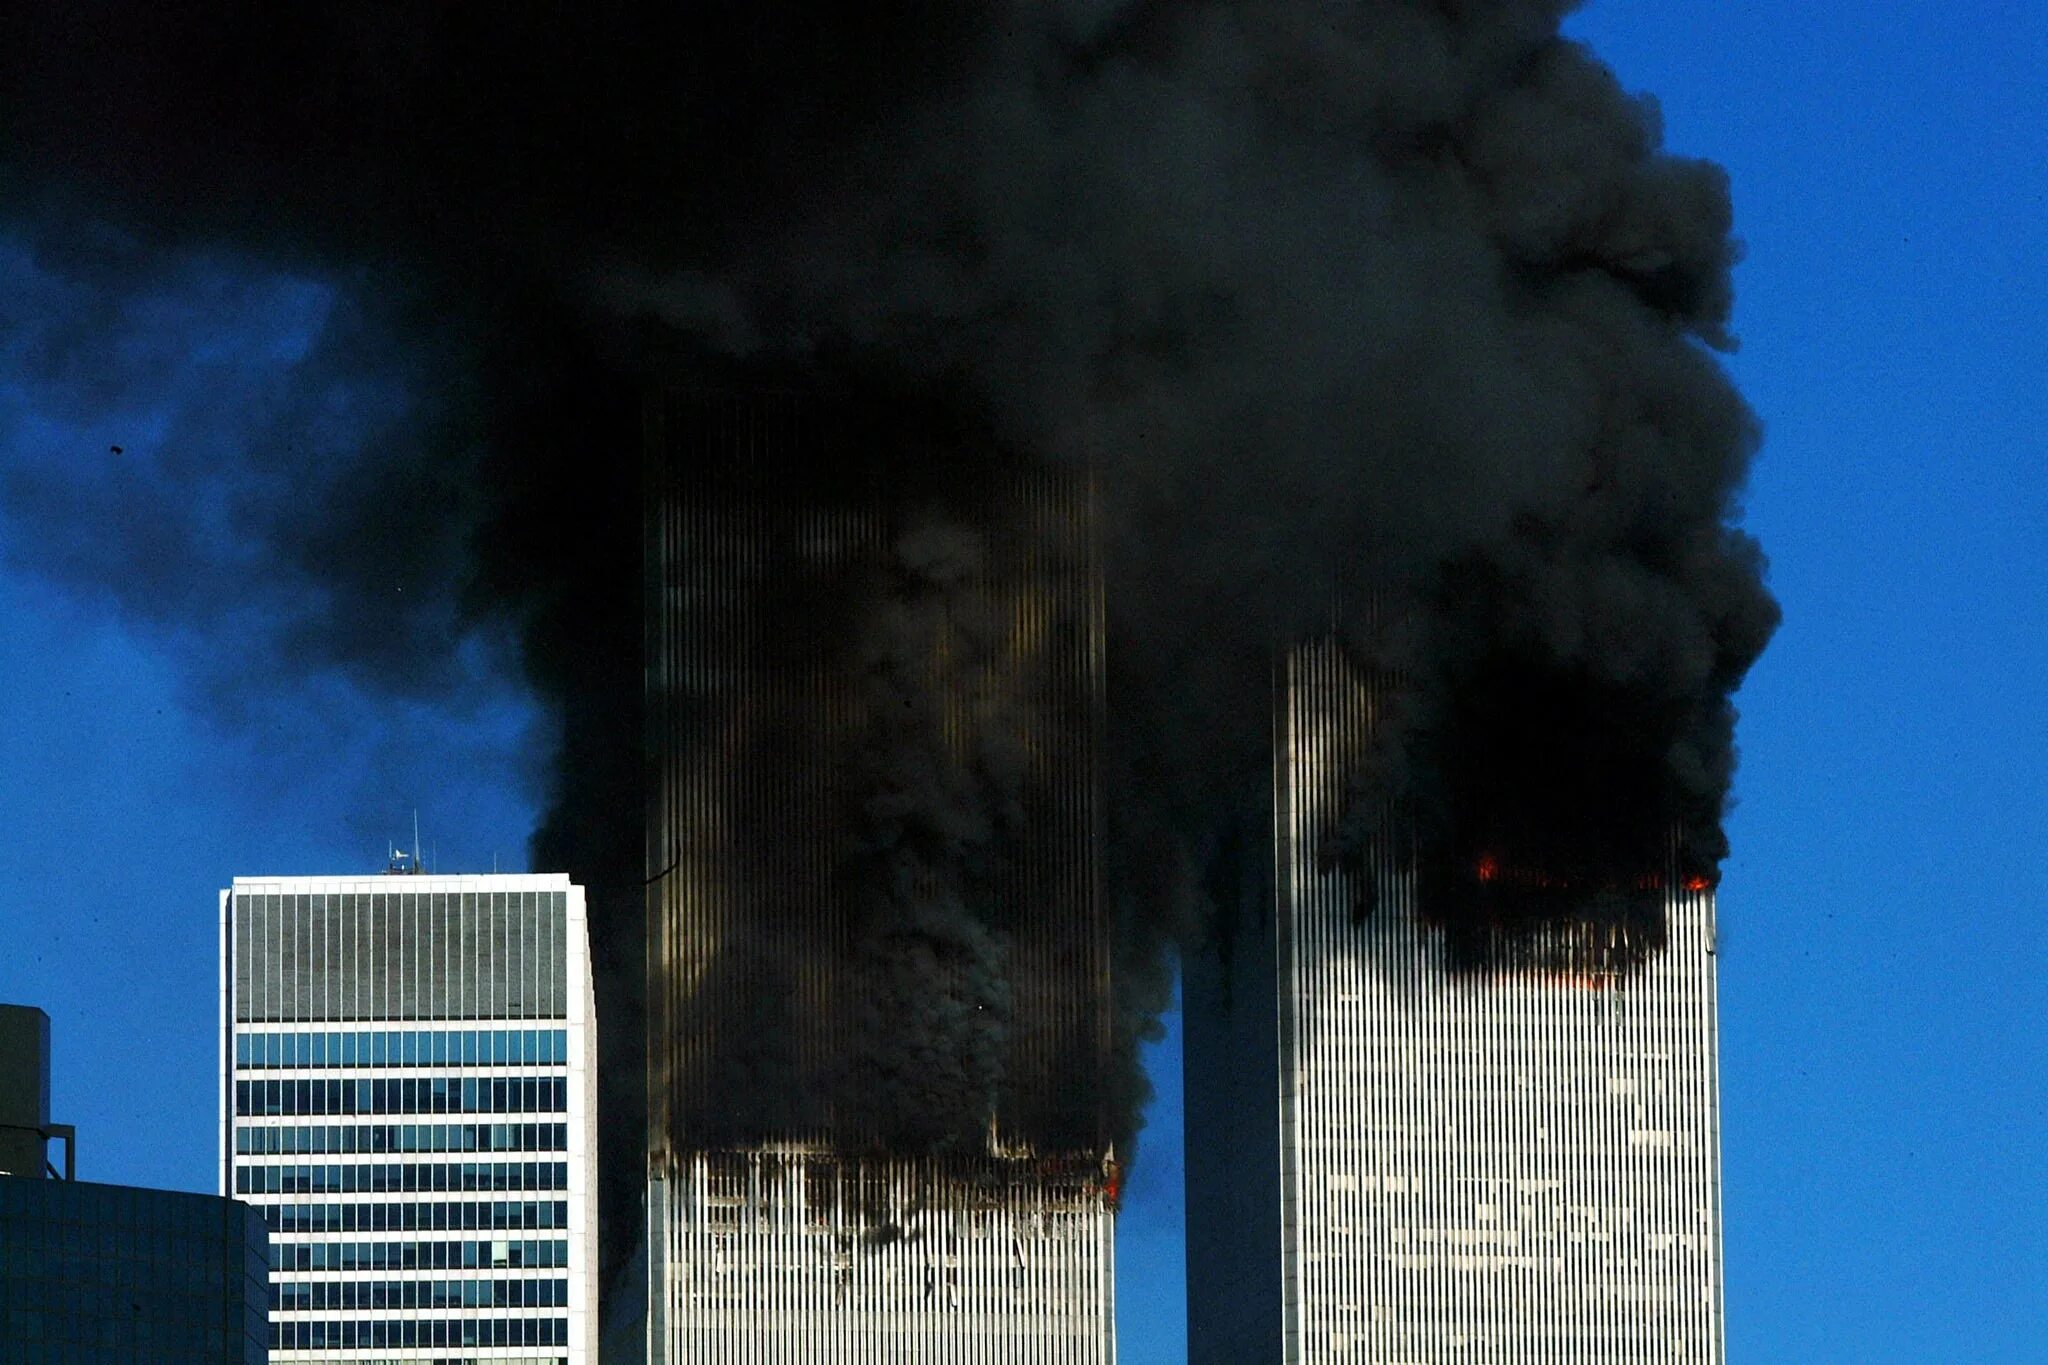 Башни-Близнецы 11 сентября 2001. Сентябрь 2001 башни Близнецы. Башня близнецов 11 сентября 2001 год.